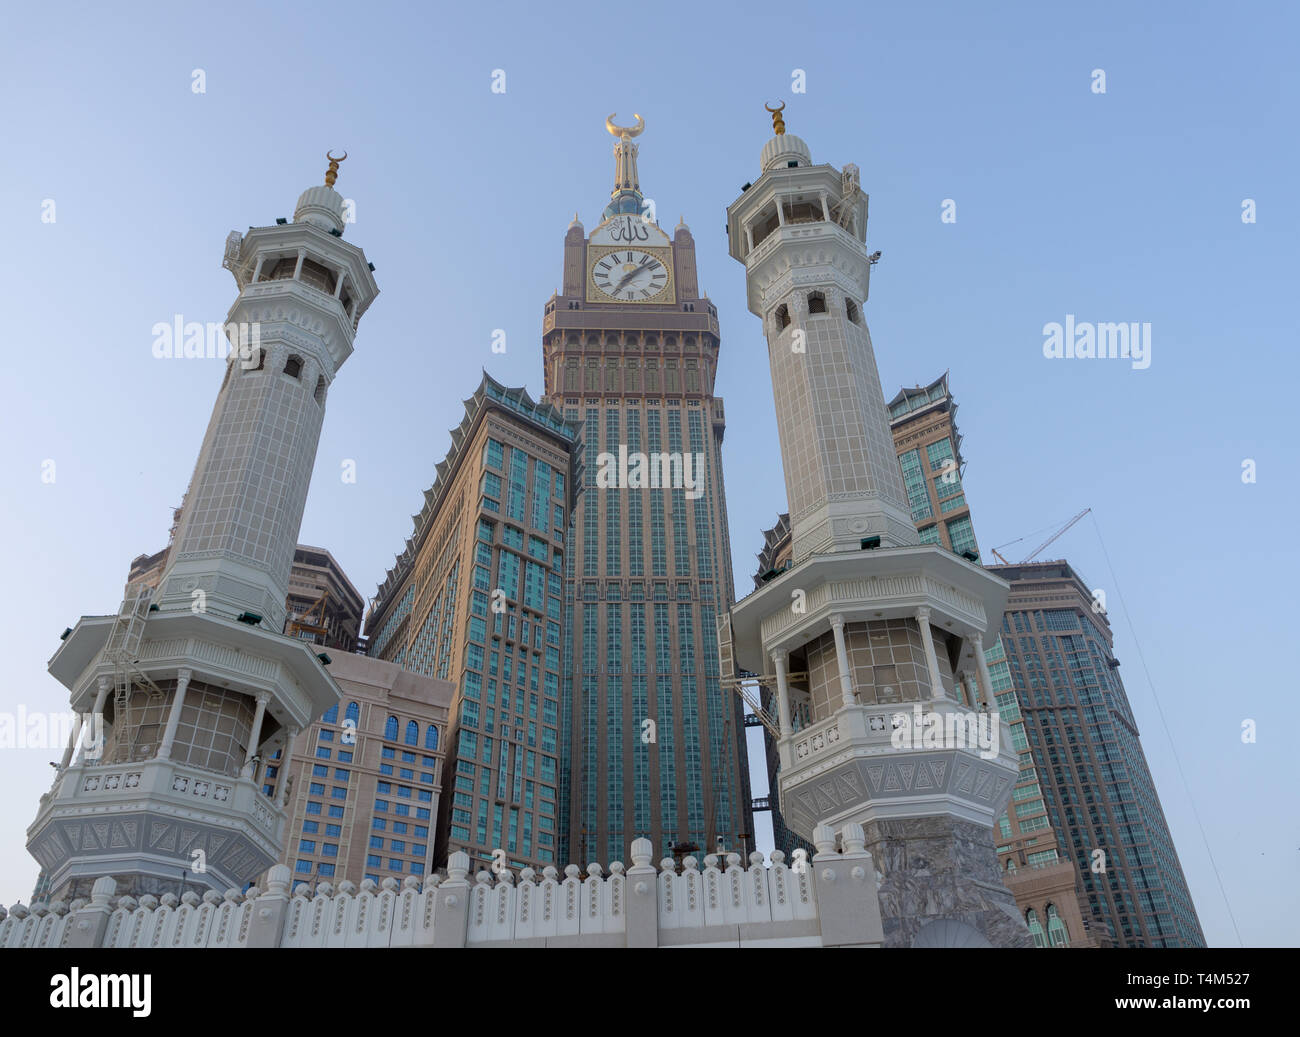 Skyline With Abraj Al Bait Royal Clock Tower Makkah In Mecca Saudi Arabia Stock Photo Alamy